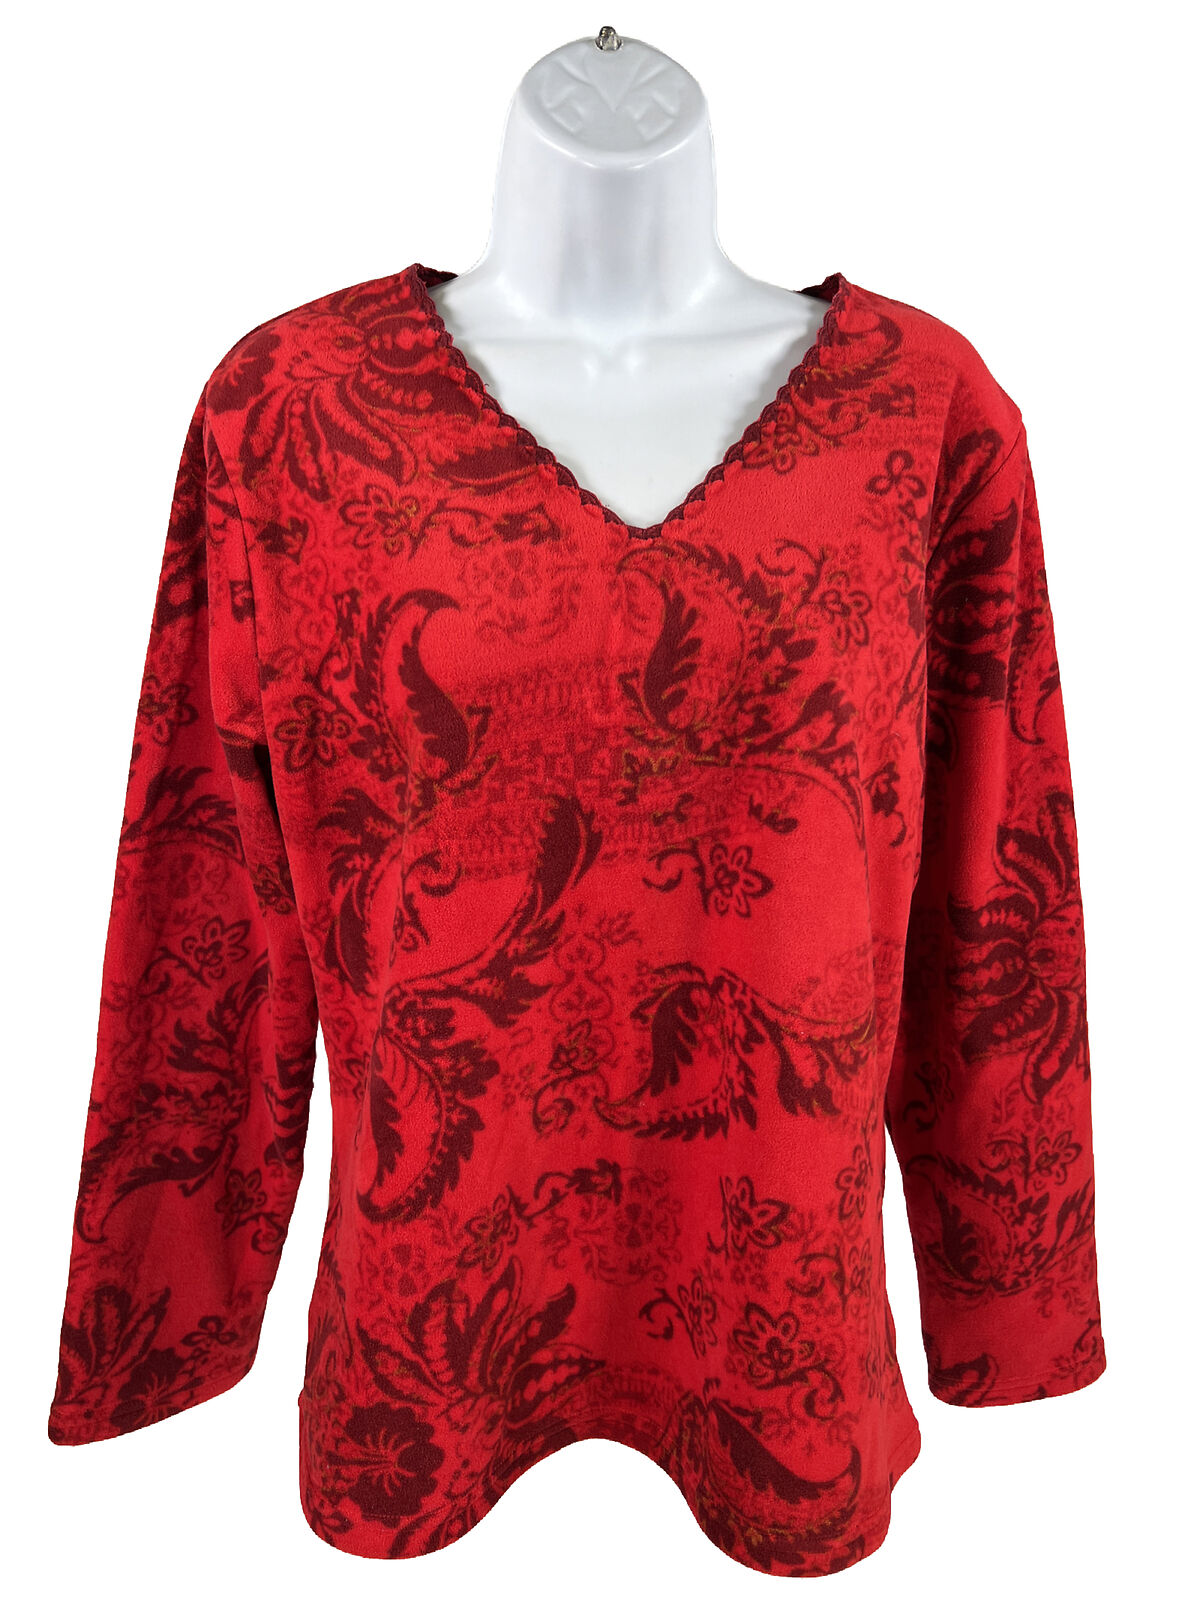 Coldwater Creek Suéter de forro polar de manga larga con estampado de cachemira rojo para mujer -S